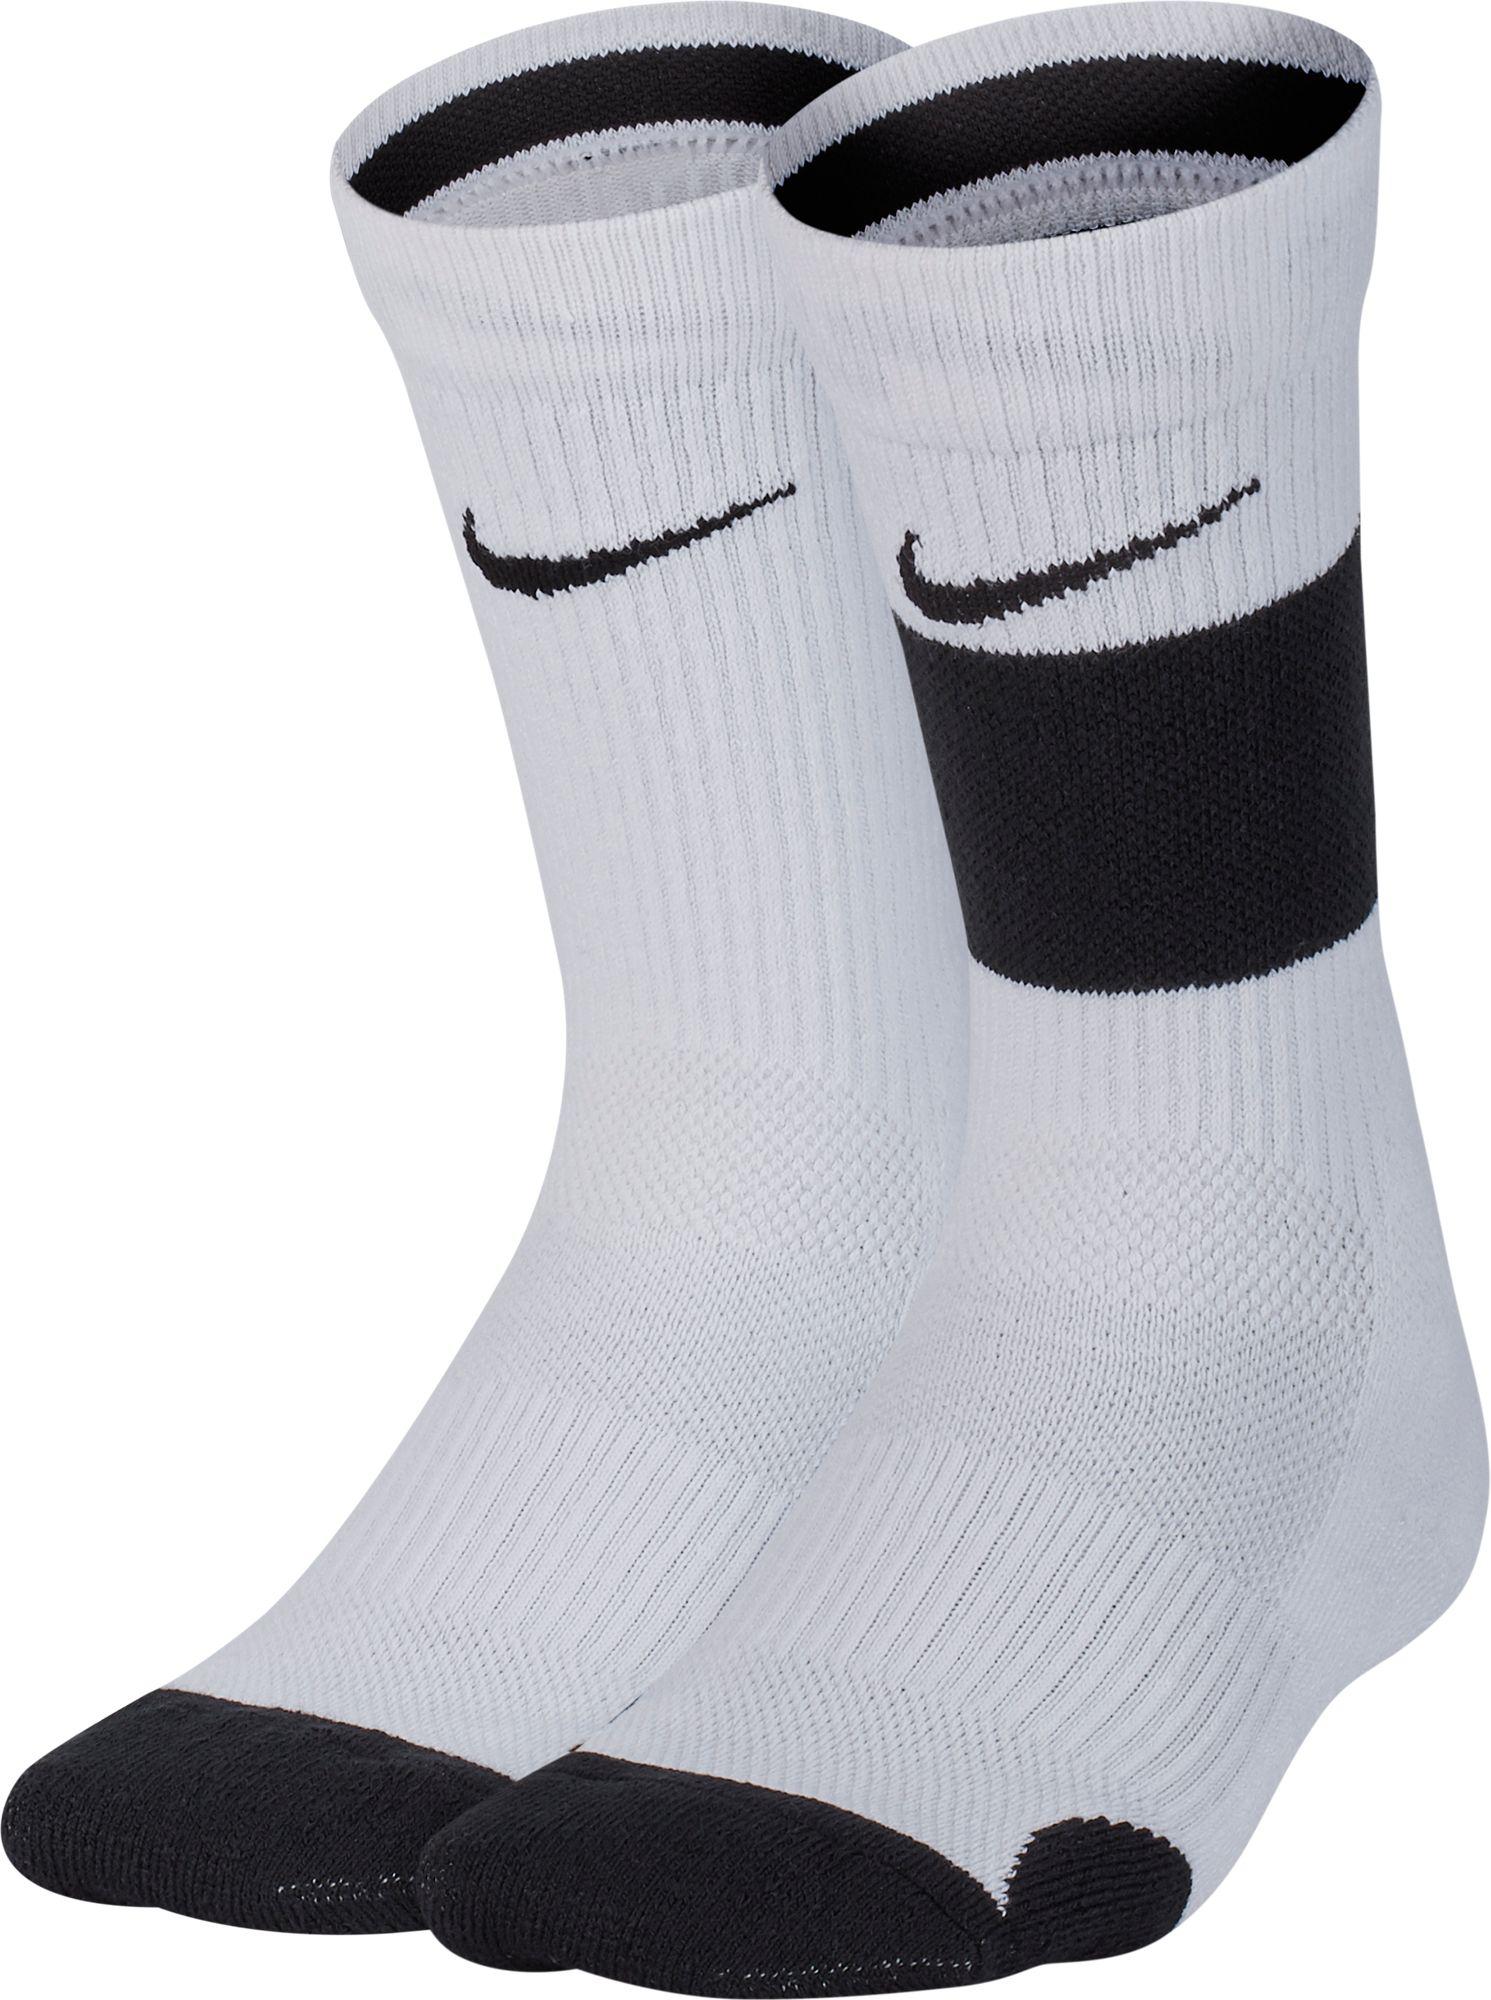 Nike Youth Elite Basketball Crew Socks - 2 Pack in White/Black (Black ...